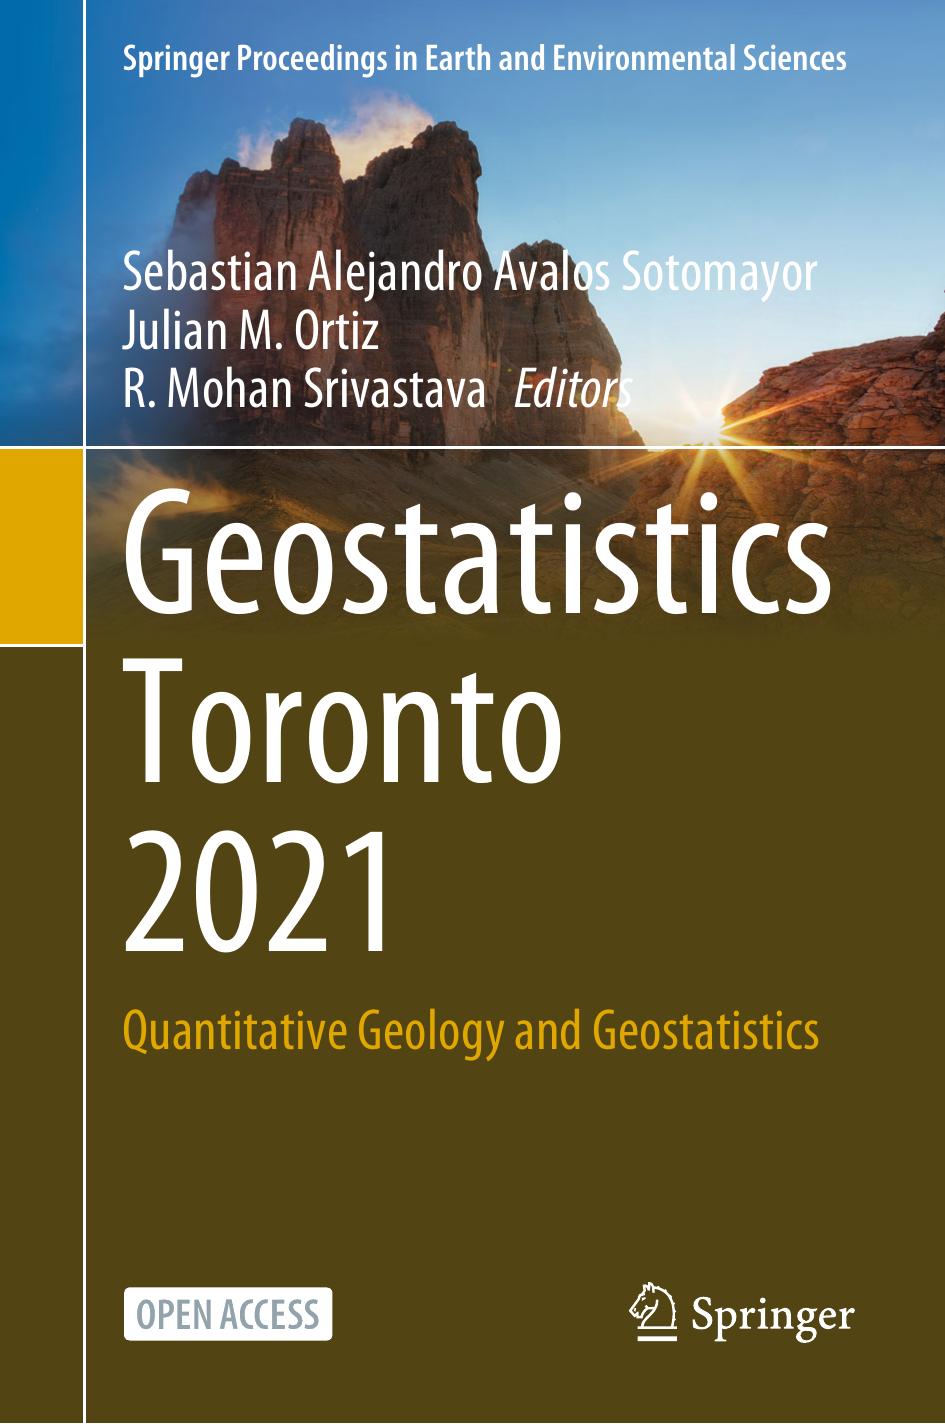 Geostatistics Toronto 2021: Quantitative Geology and Geostatistics by Sebastian Alejandro Avalos Sotomayor Julian M. Ortiz R. Mohan Srivastava